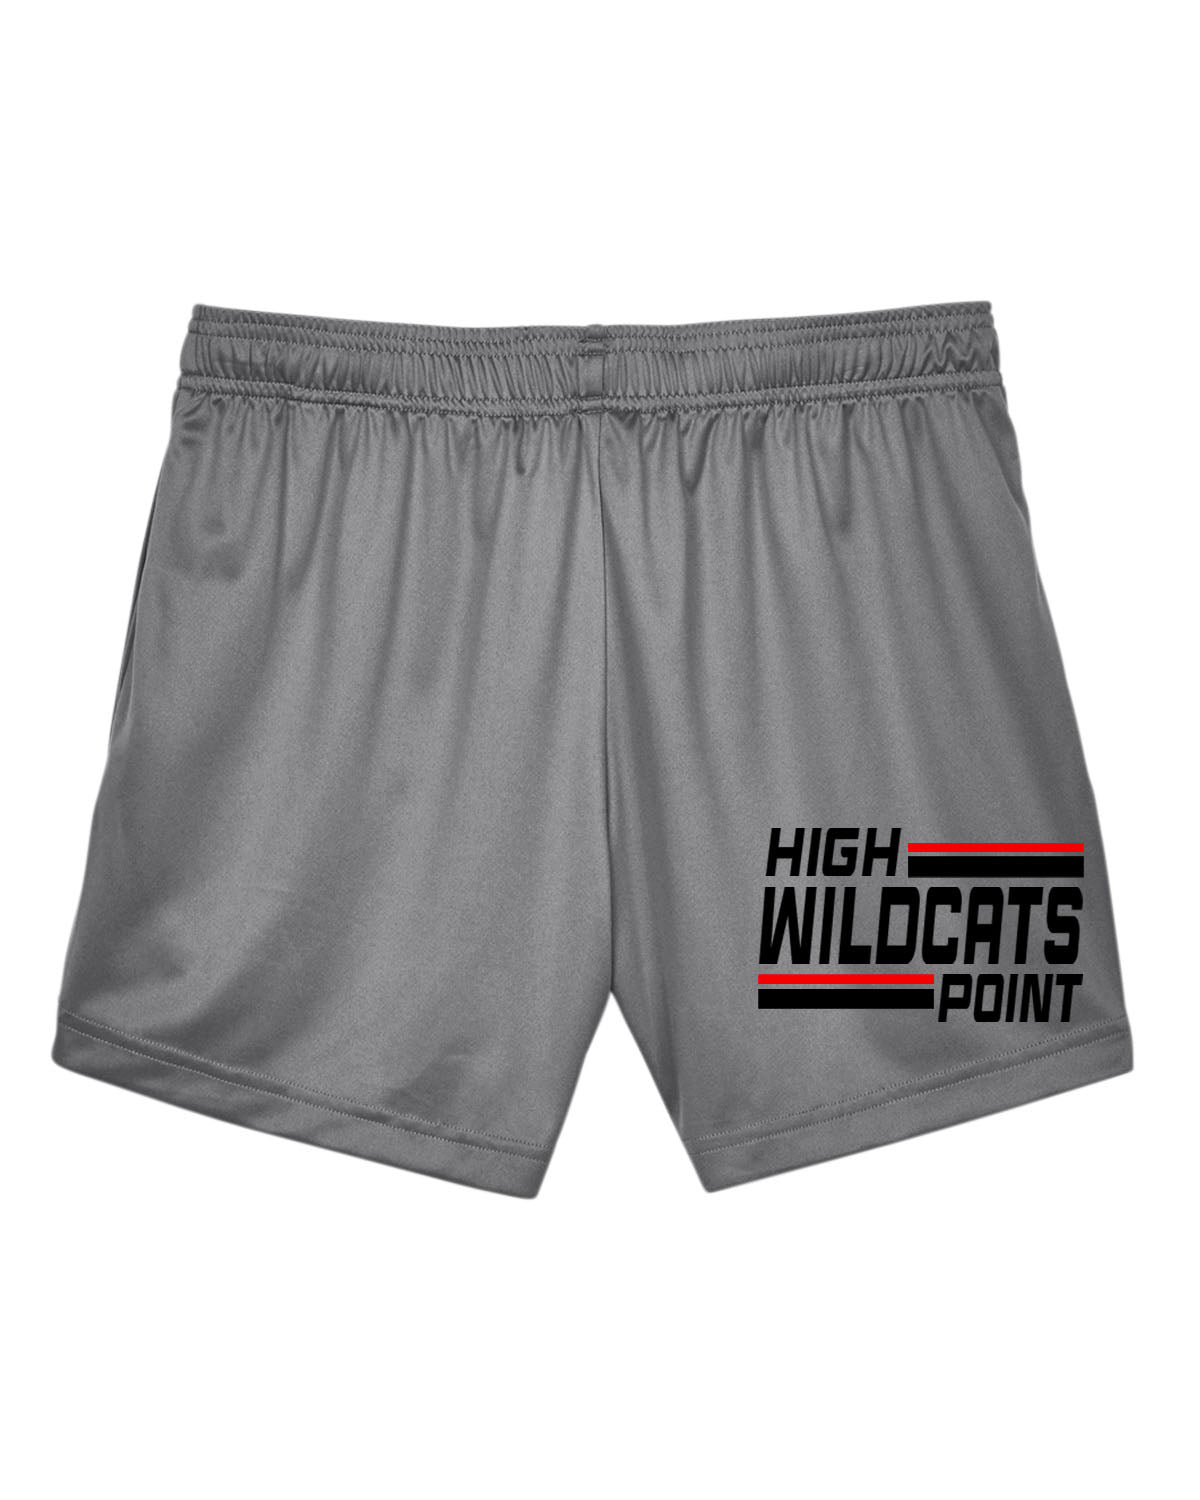 Wildcats Cheer Ladies Performance Design 4 Shorts